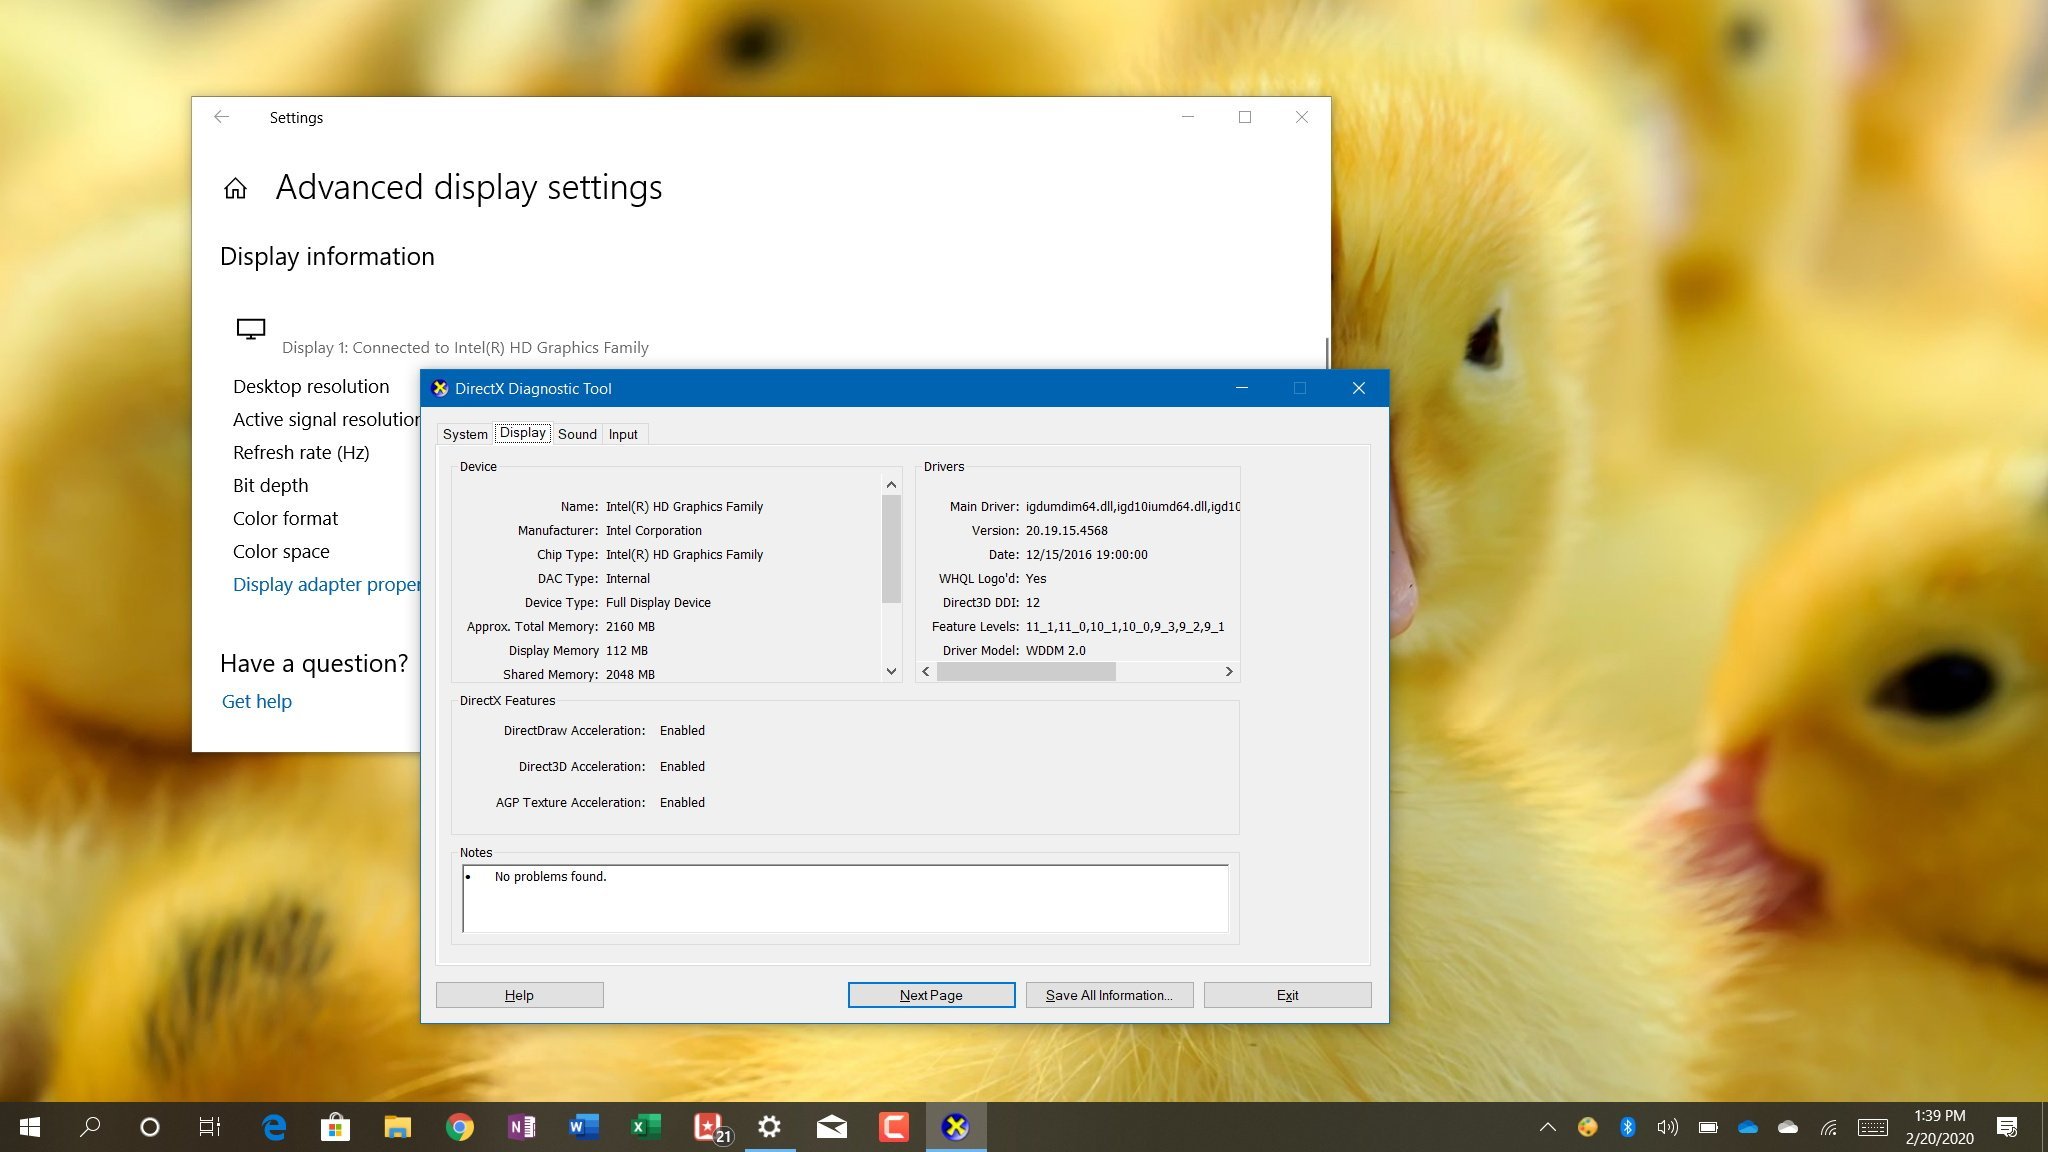 Windows 10 directx graphics tools support